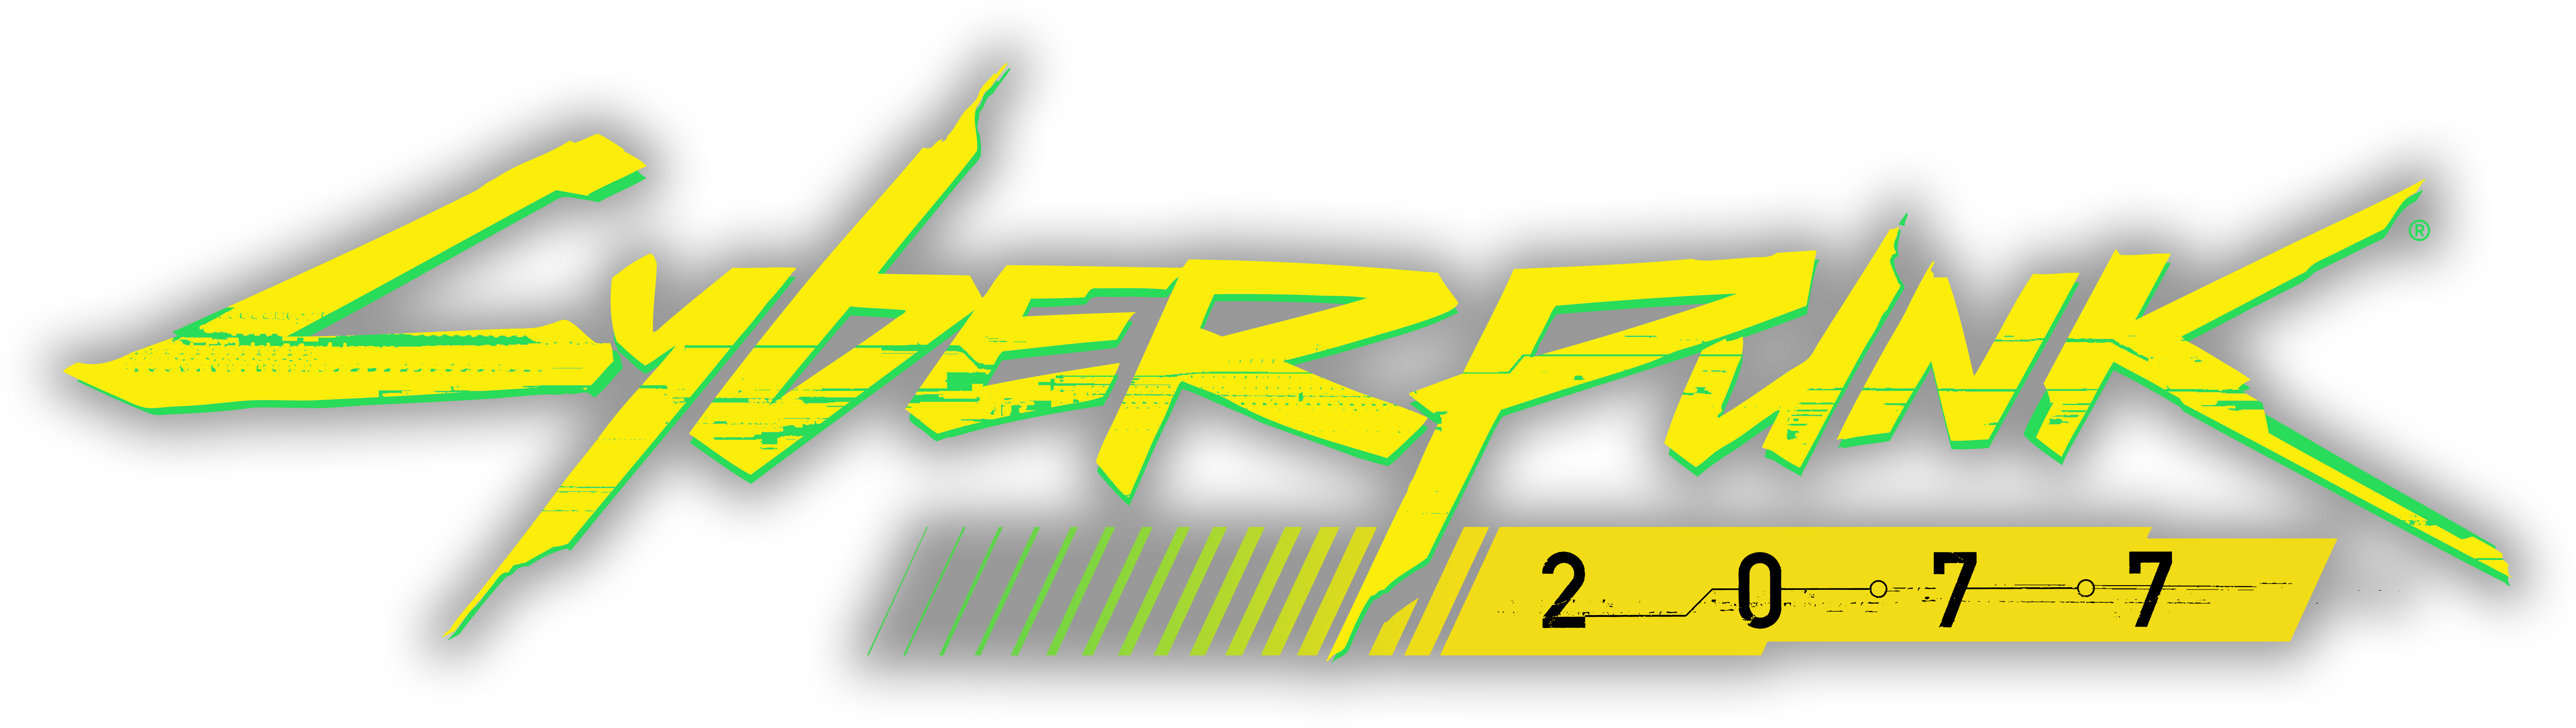 Cyberpunk логотип png фото 24